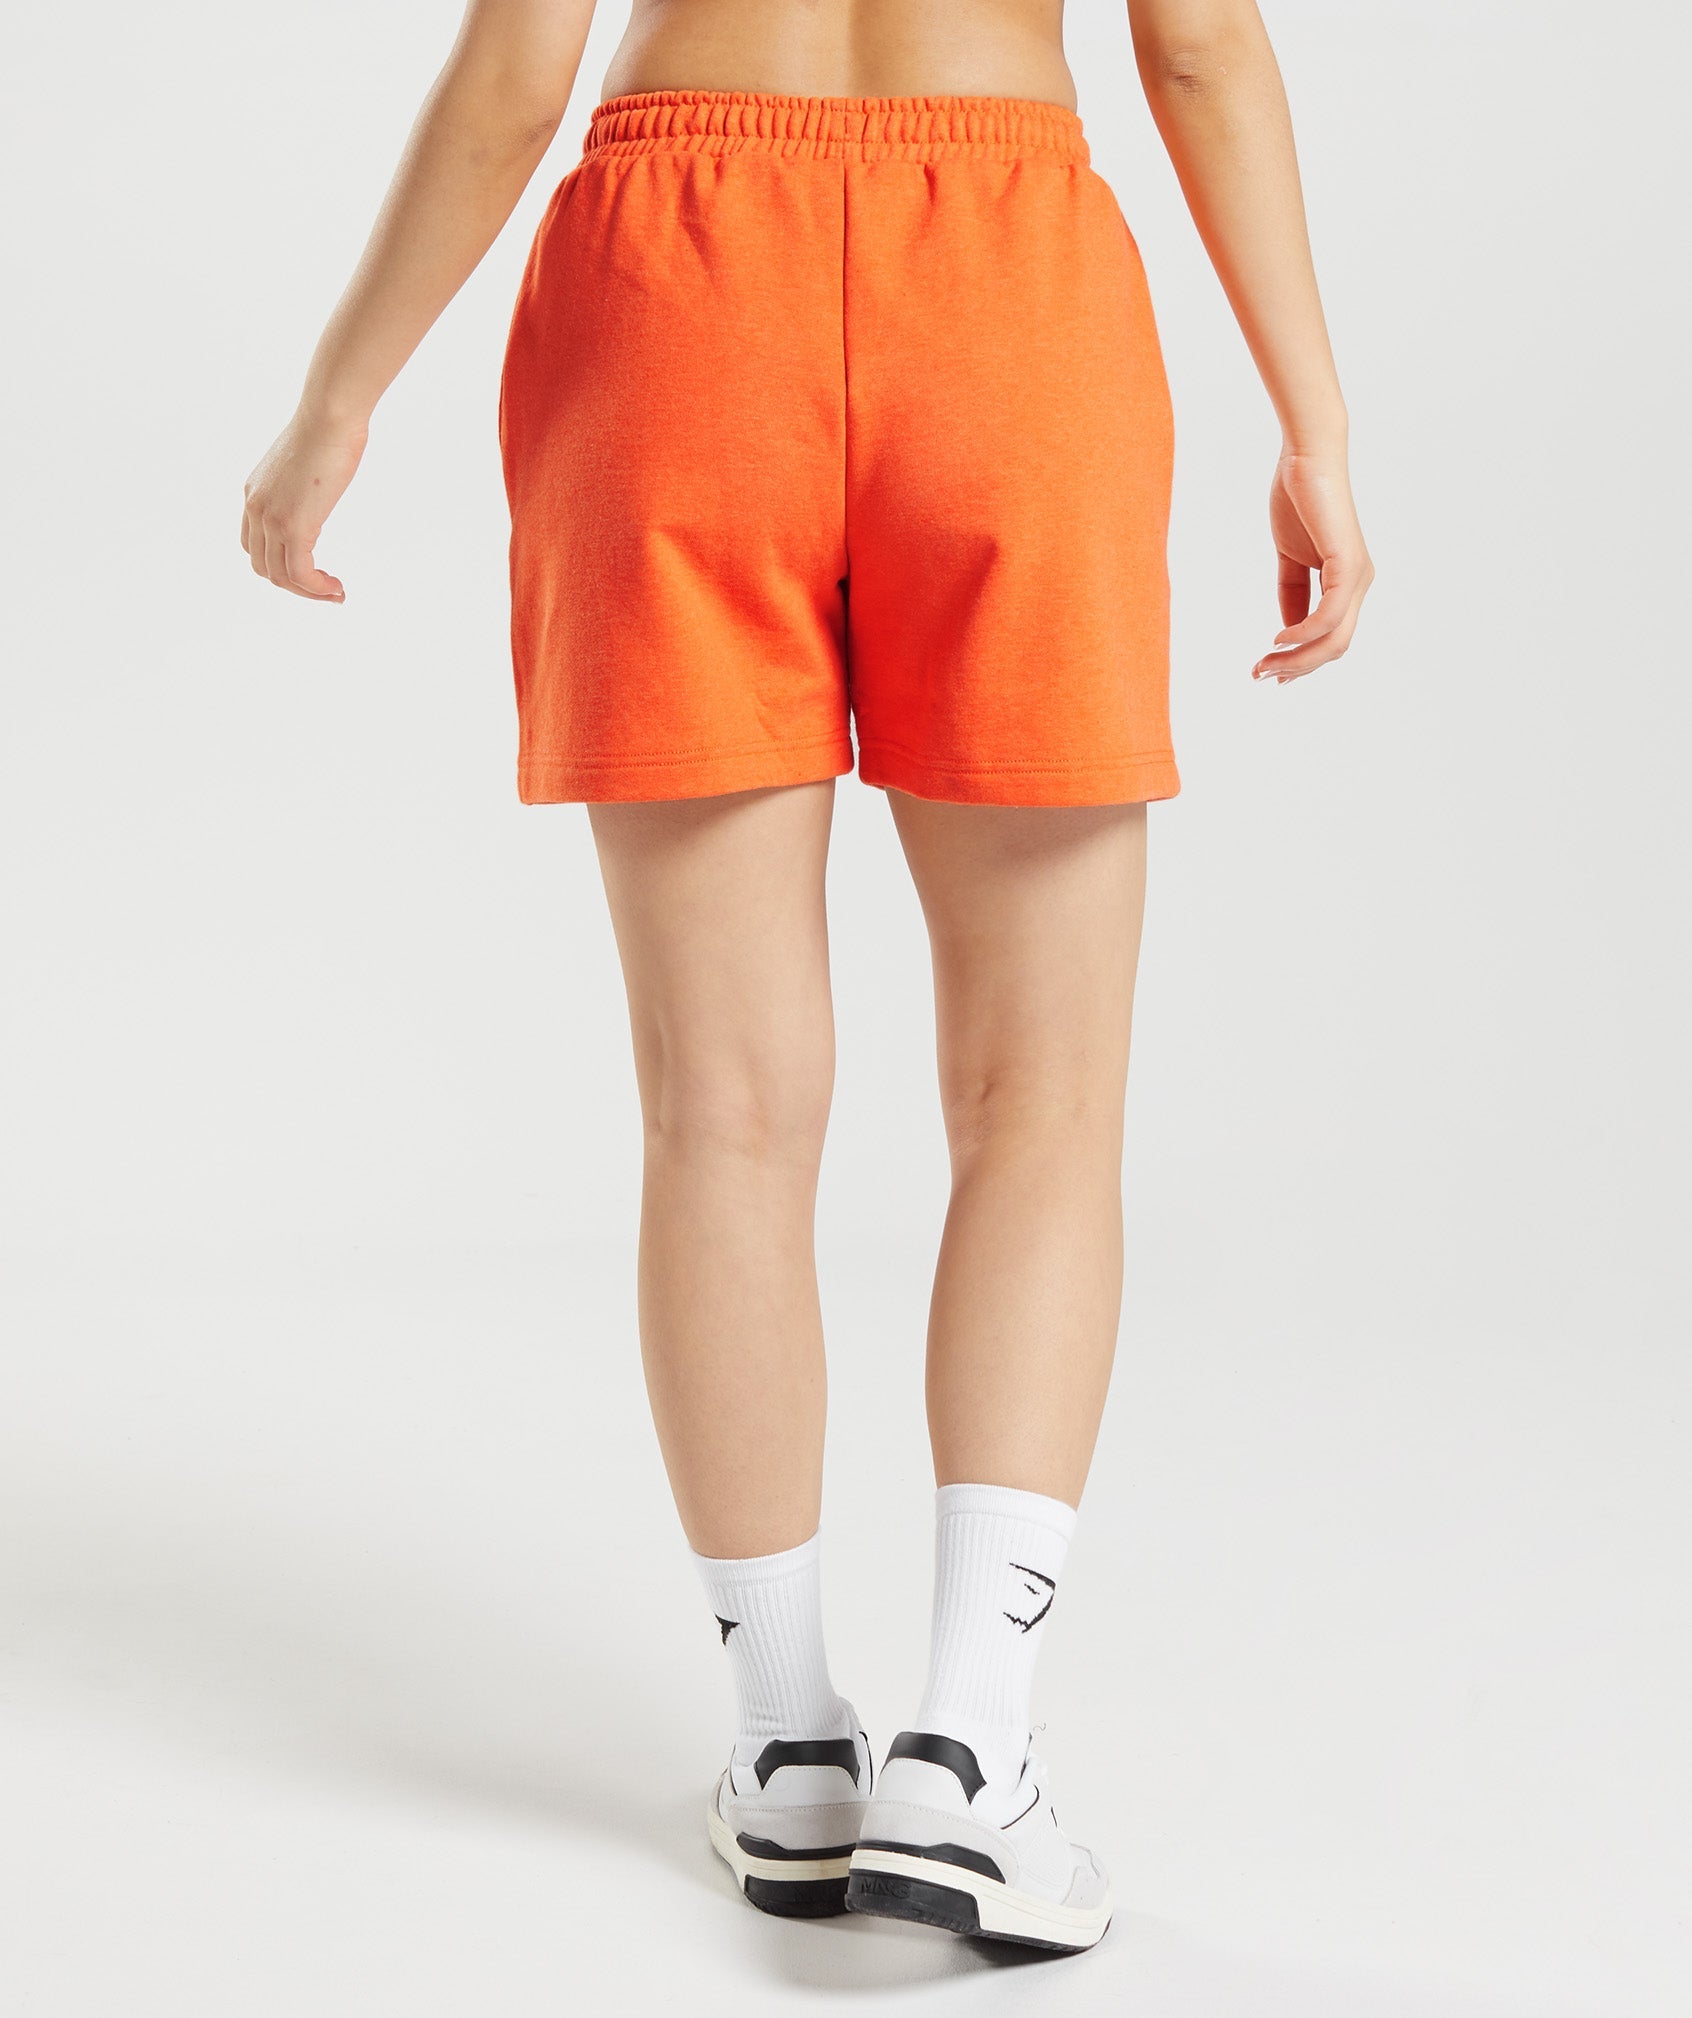 Rest Day Sweats Shorts in Blaze Orange Marl